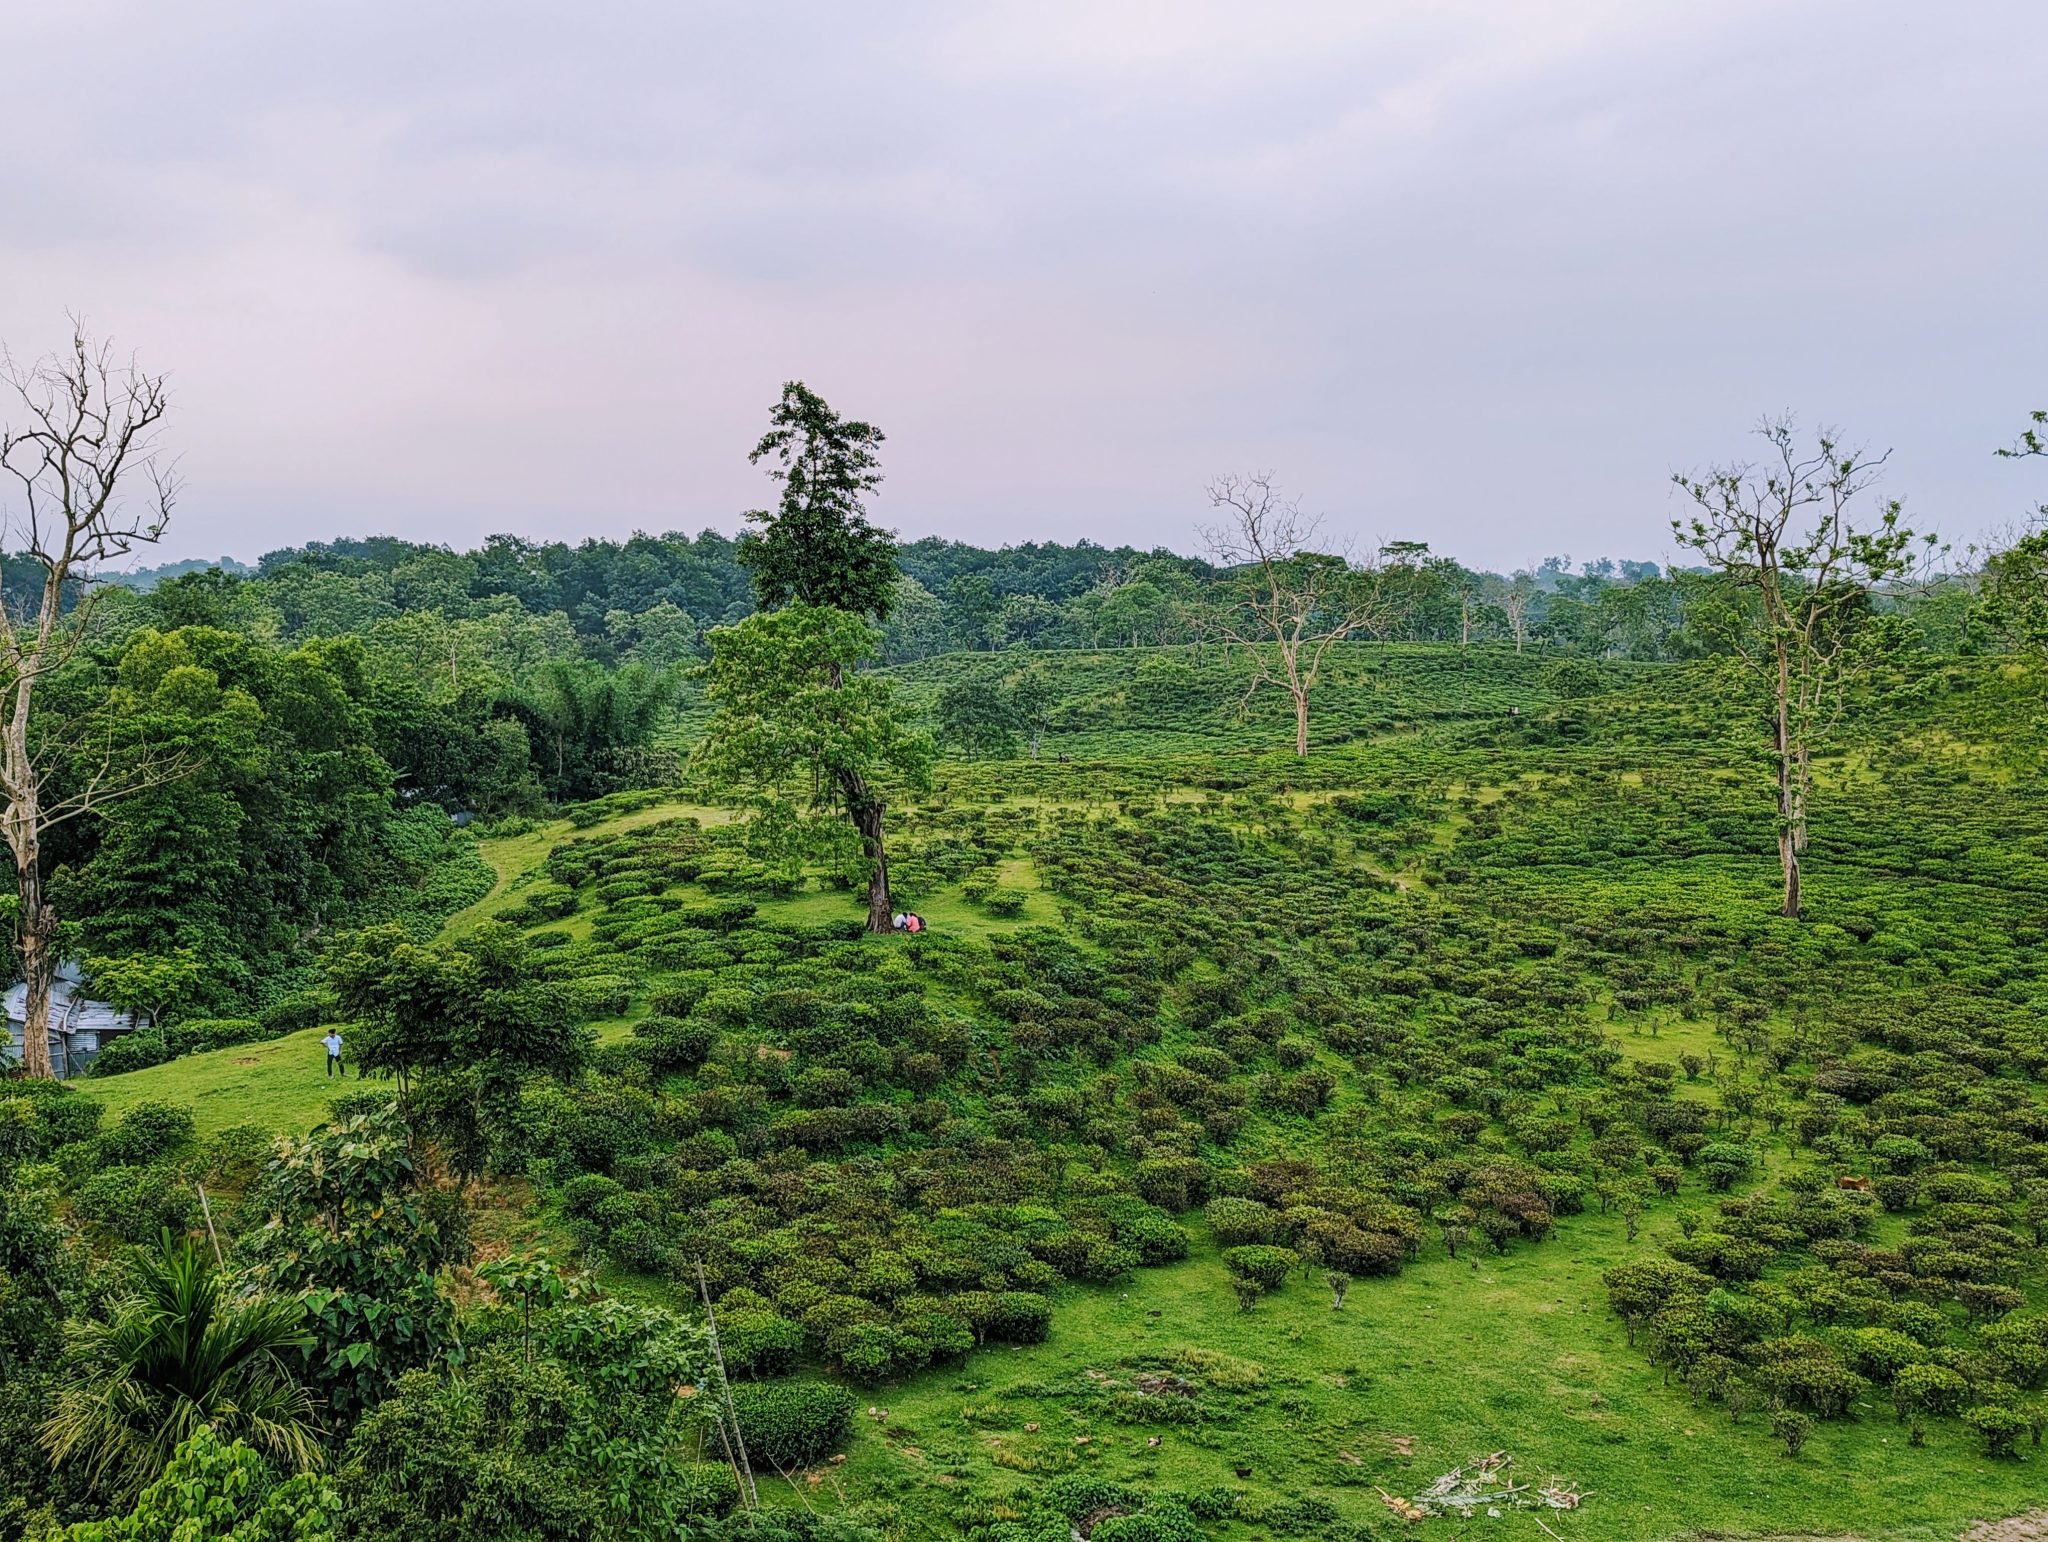 This image is a snap of the borderline of Lakkatura Teagarden, Sylhet. It's one of the largest Teagarden of Sylhet.